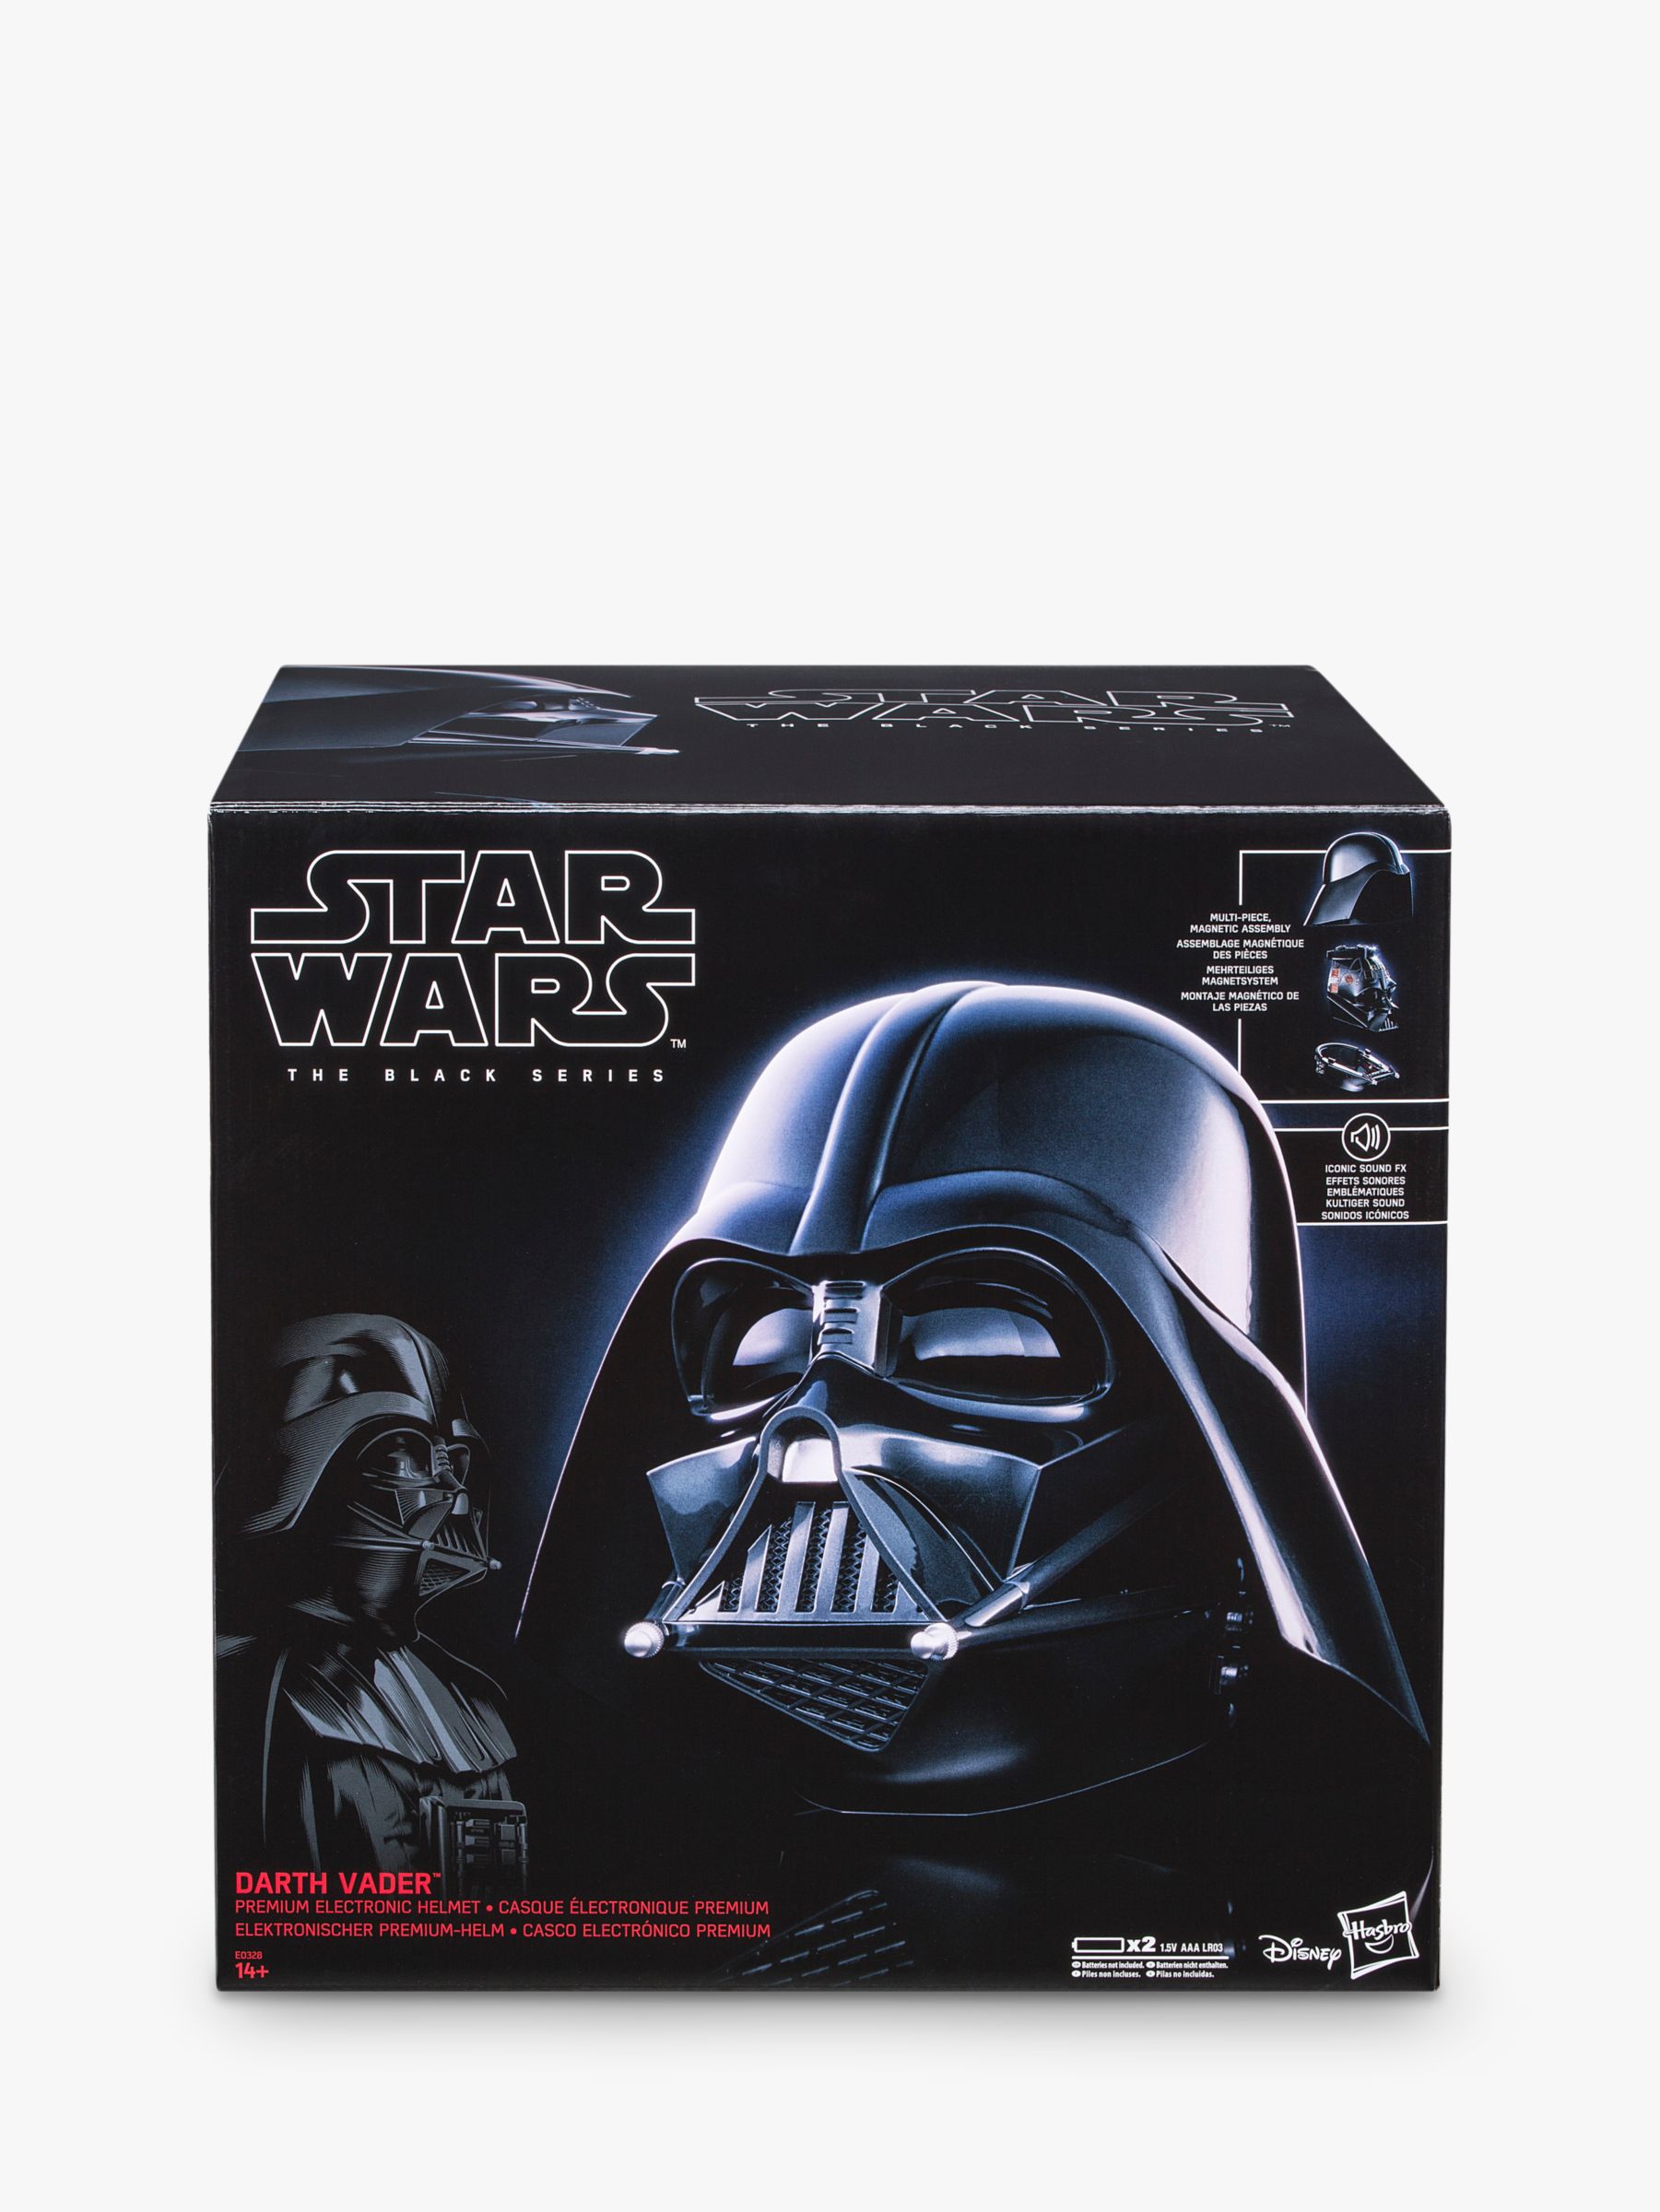 Productiviteit Slank Ploeg Star Wars The Black Series Darth Vader Premium Electronic Helmet